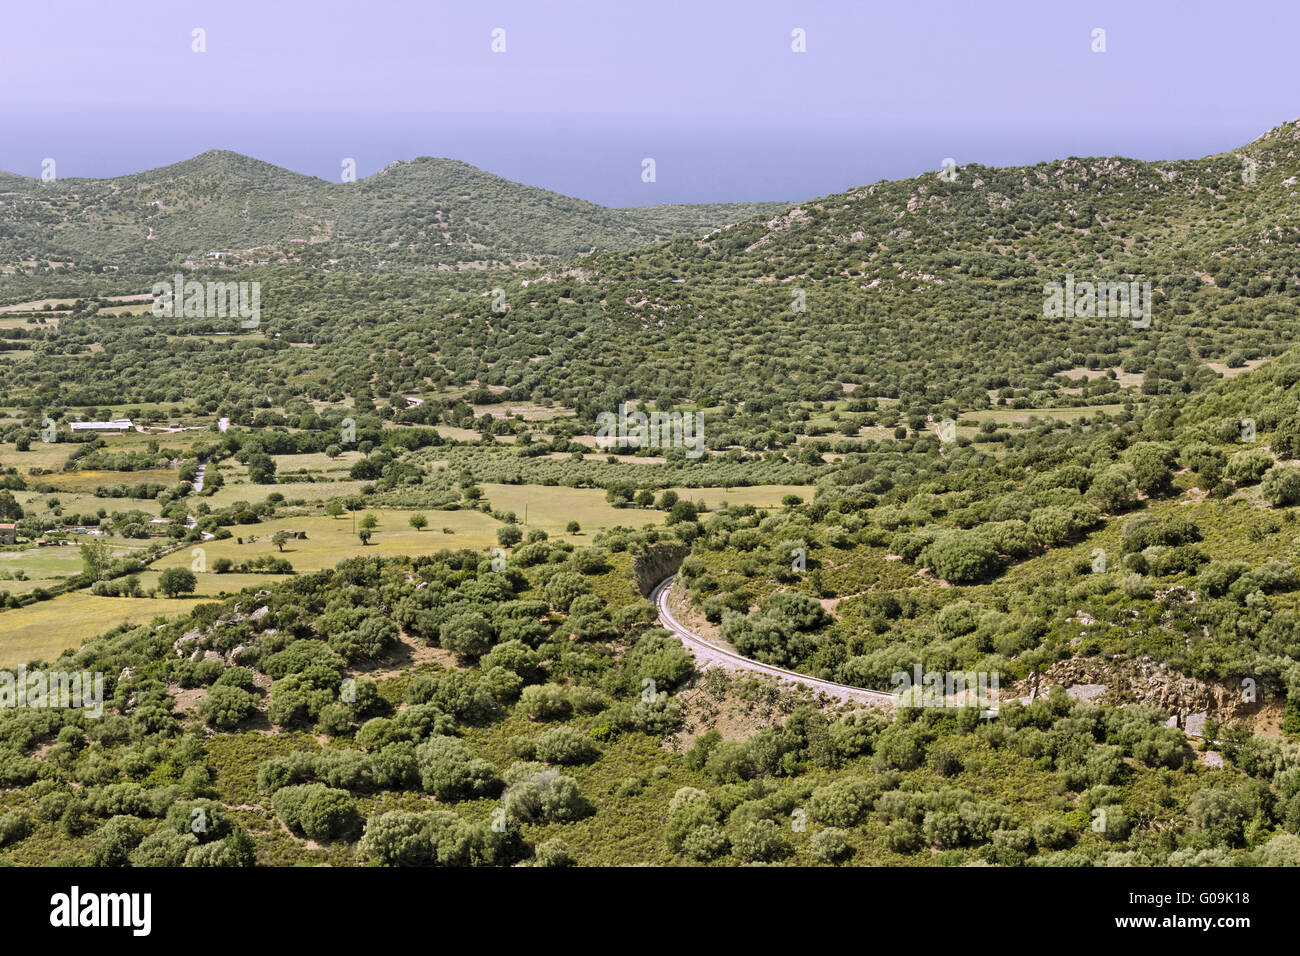 Landscape nearby Belgodere, Nebbio region, Corsica Stock Photo